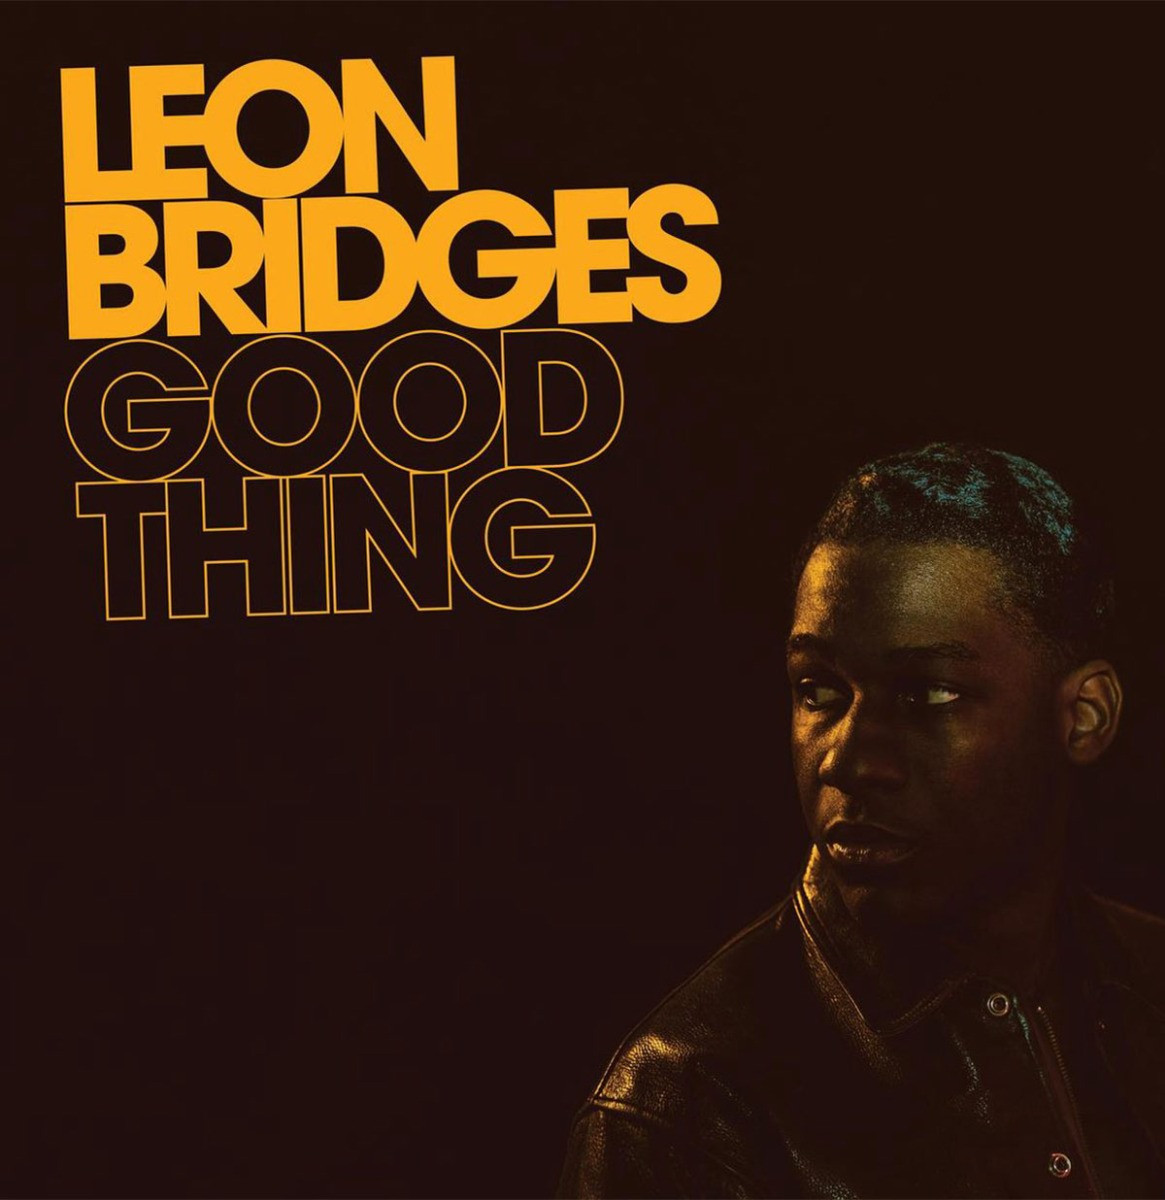 Leon Bridges - Good Thing LP